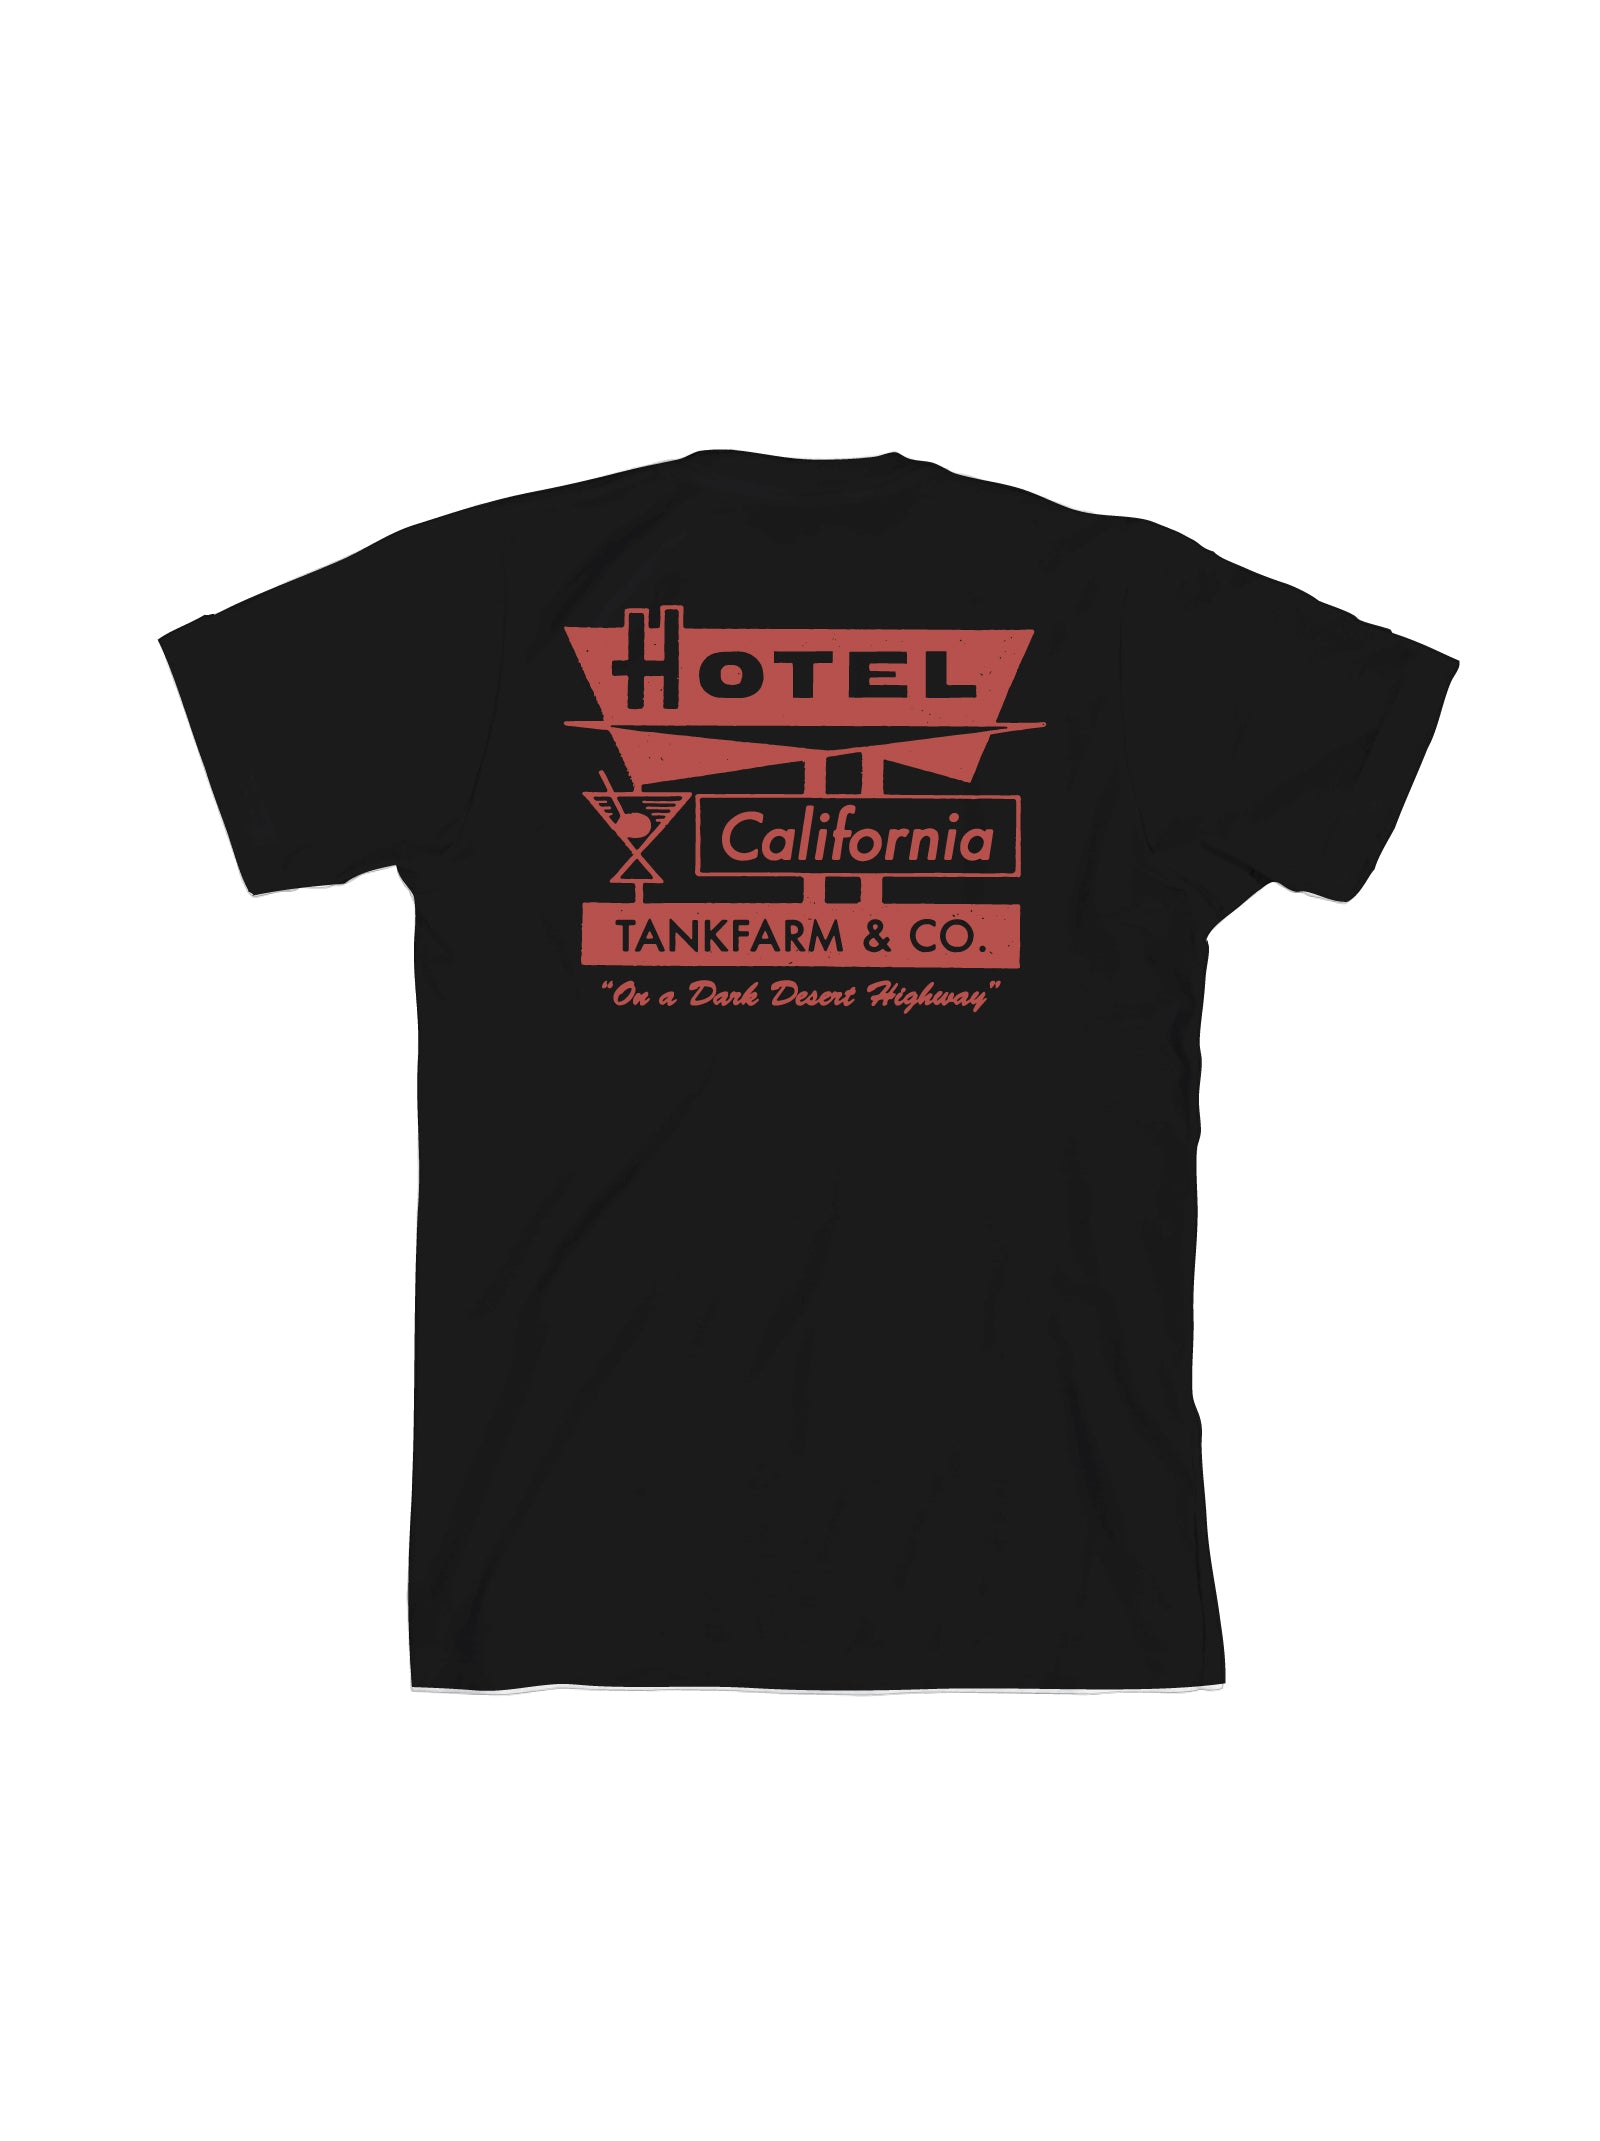 HOTEL CALIFORNIA - BLACK - Tankfarm & Co.